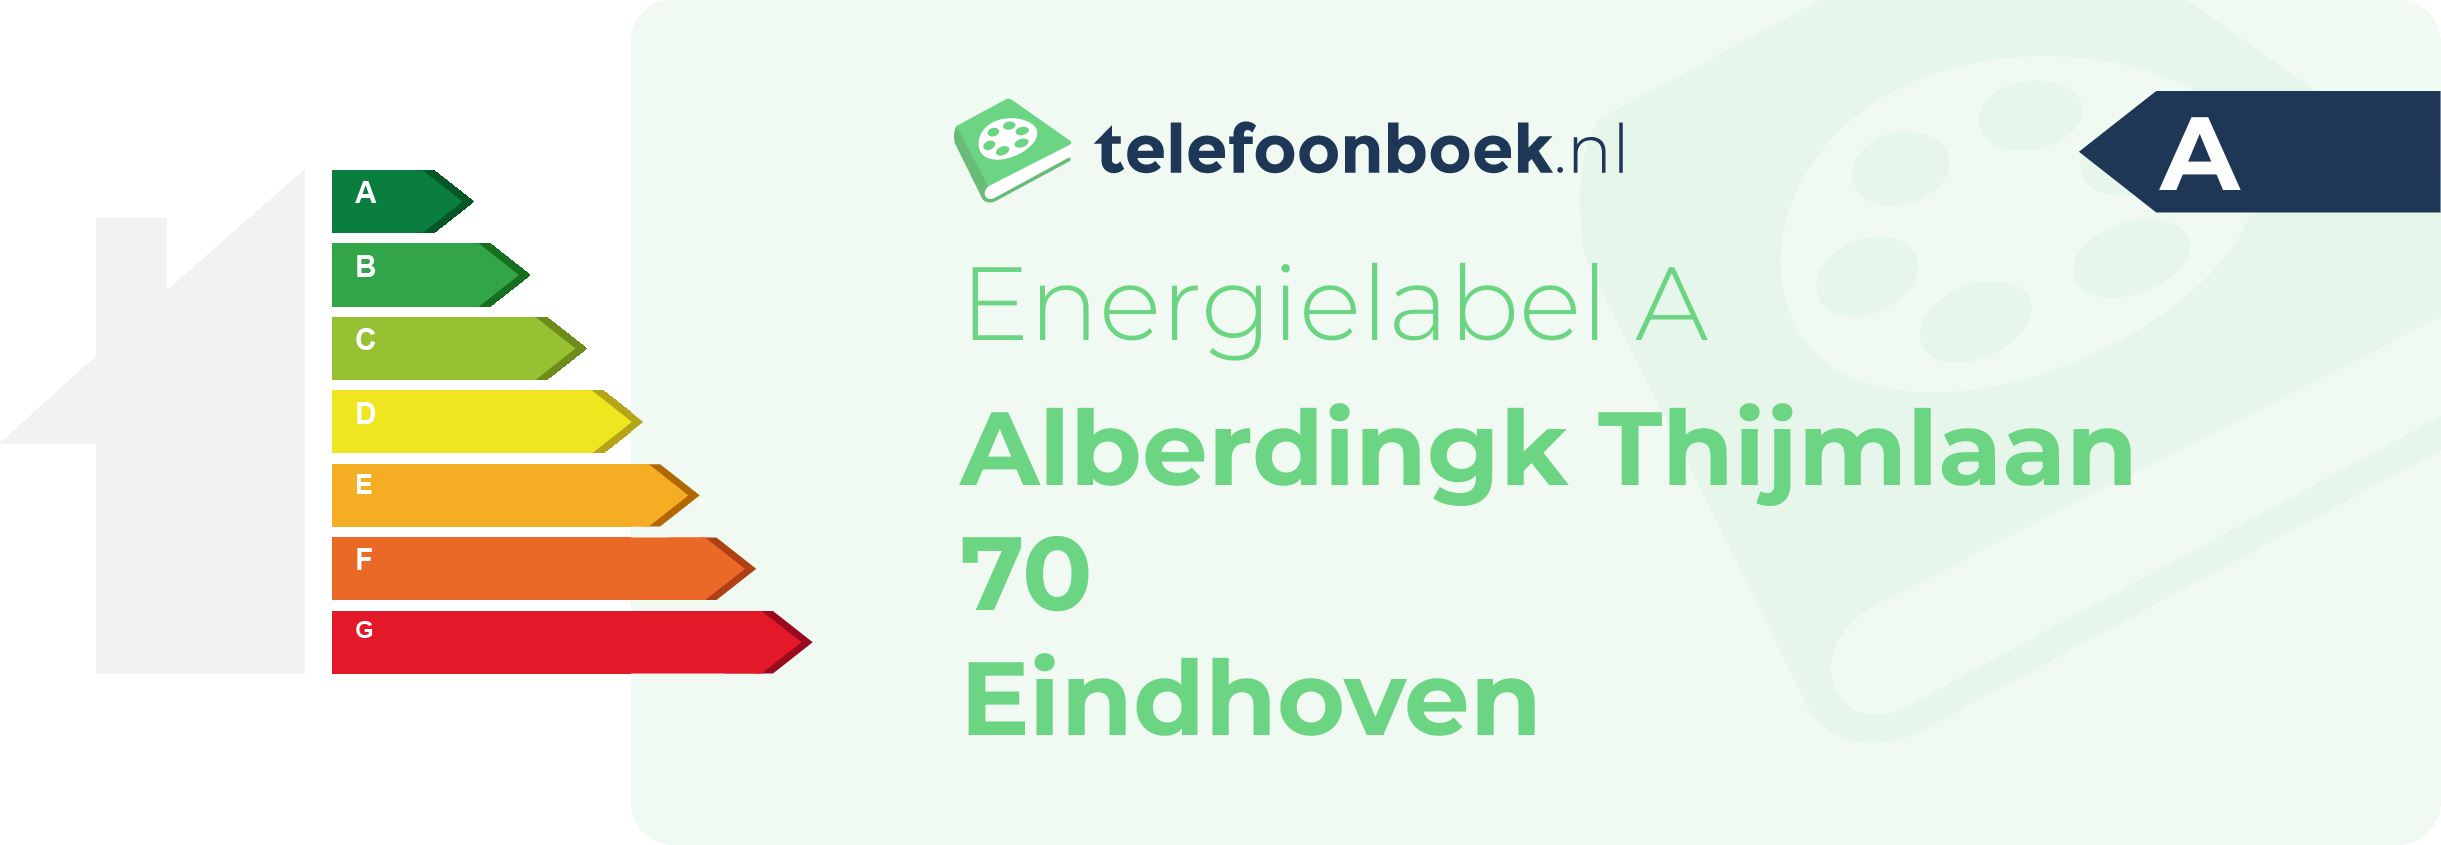 Energielabel Alberdingk Thijmlaan 70 Eindhoven